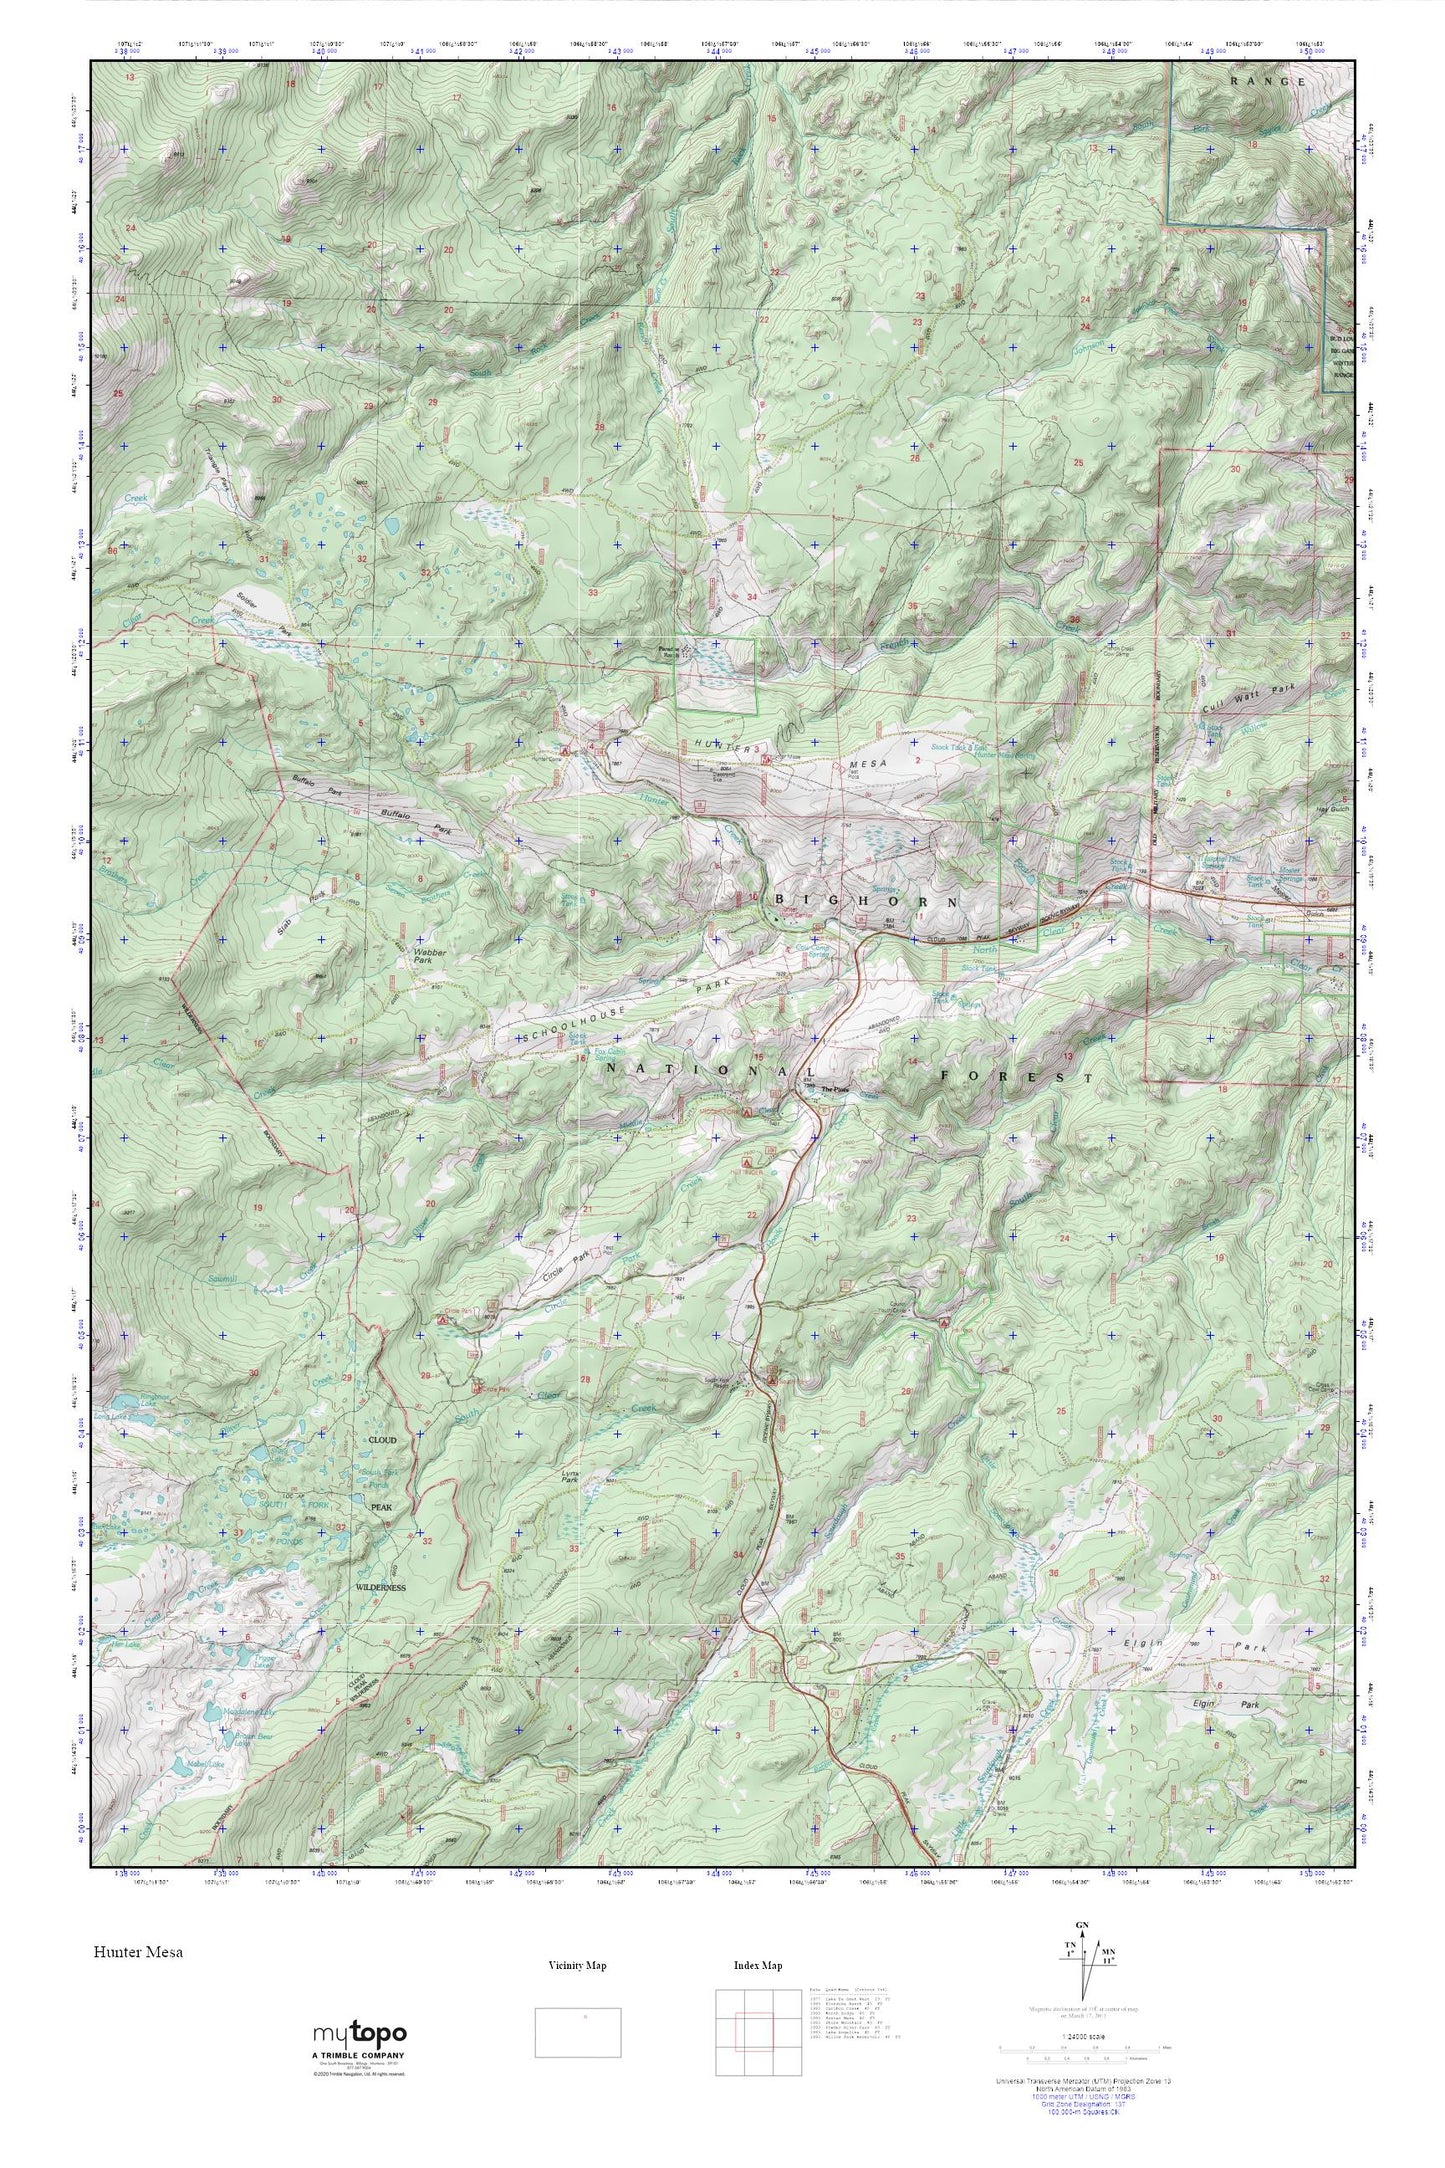 Hunter Mesa MyTopo Explorer Series Map Image